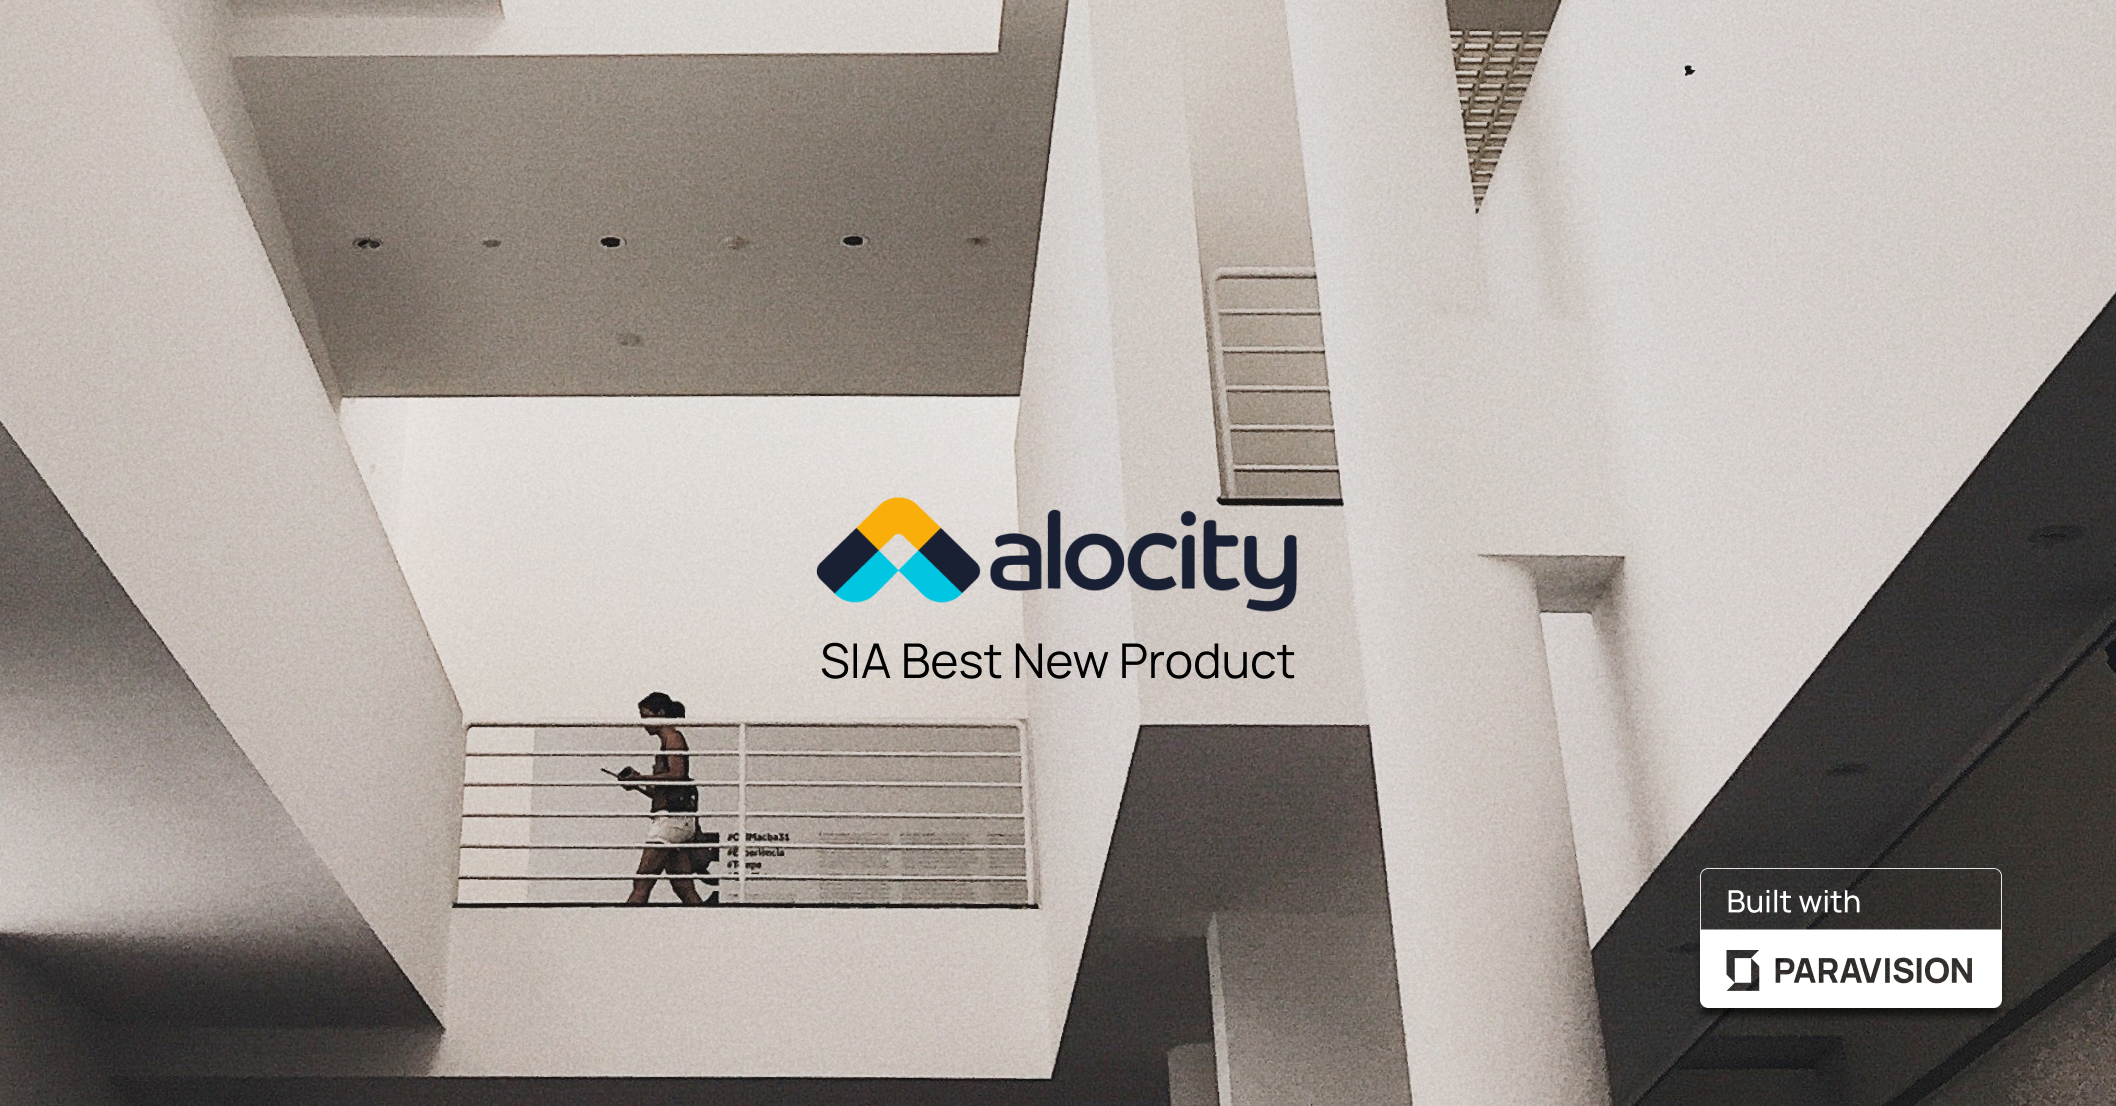 Alocity_header